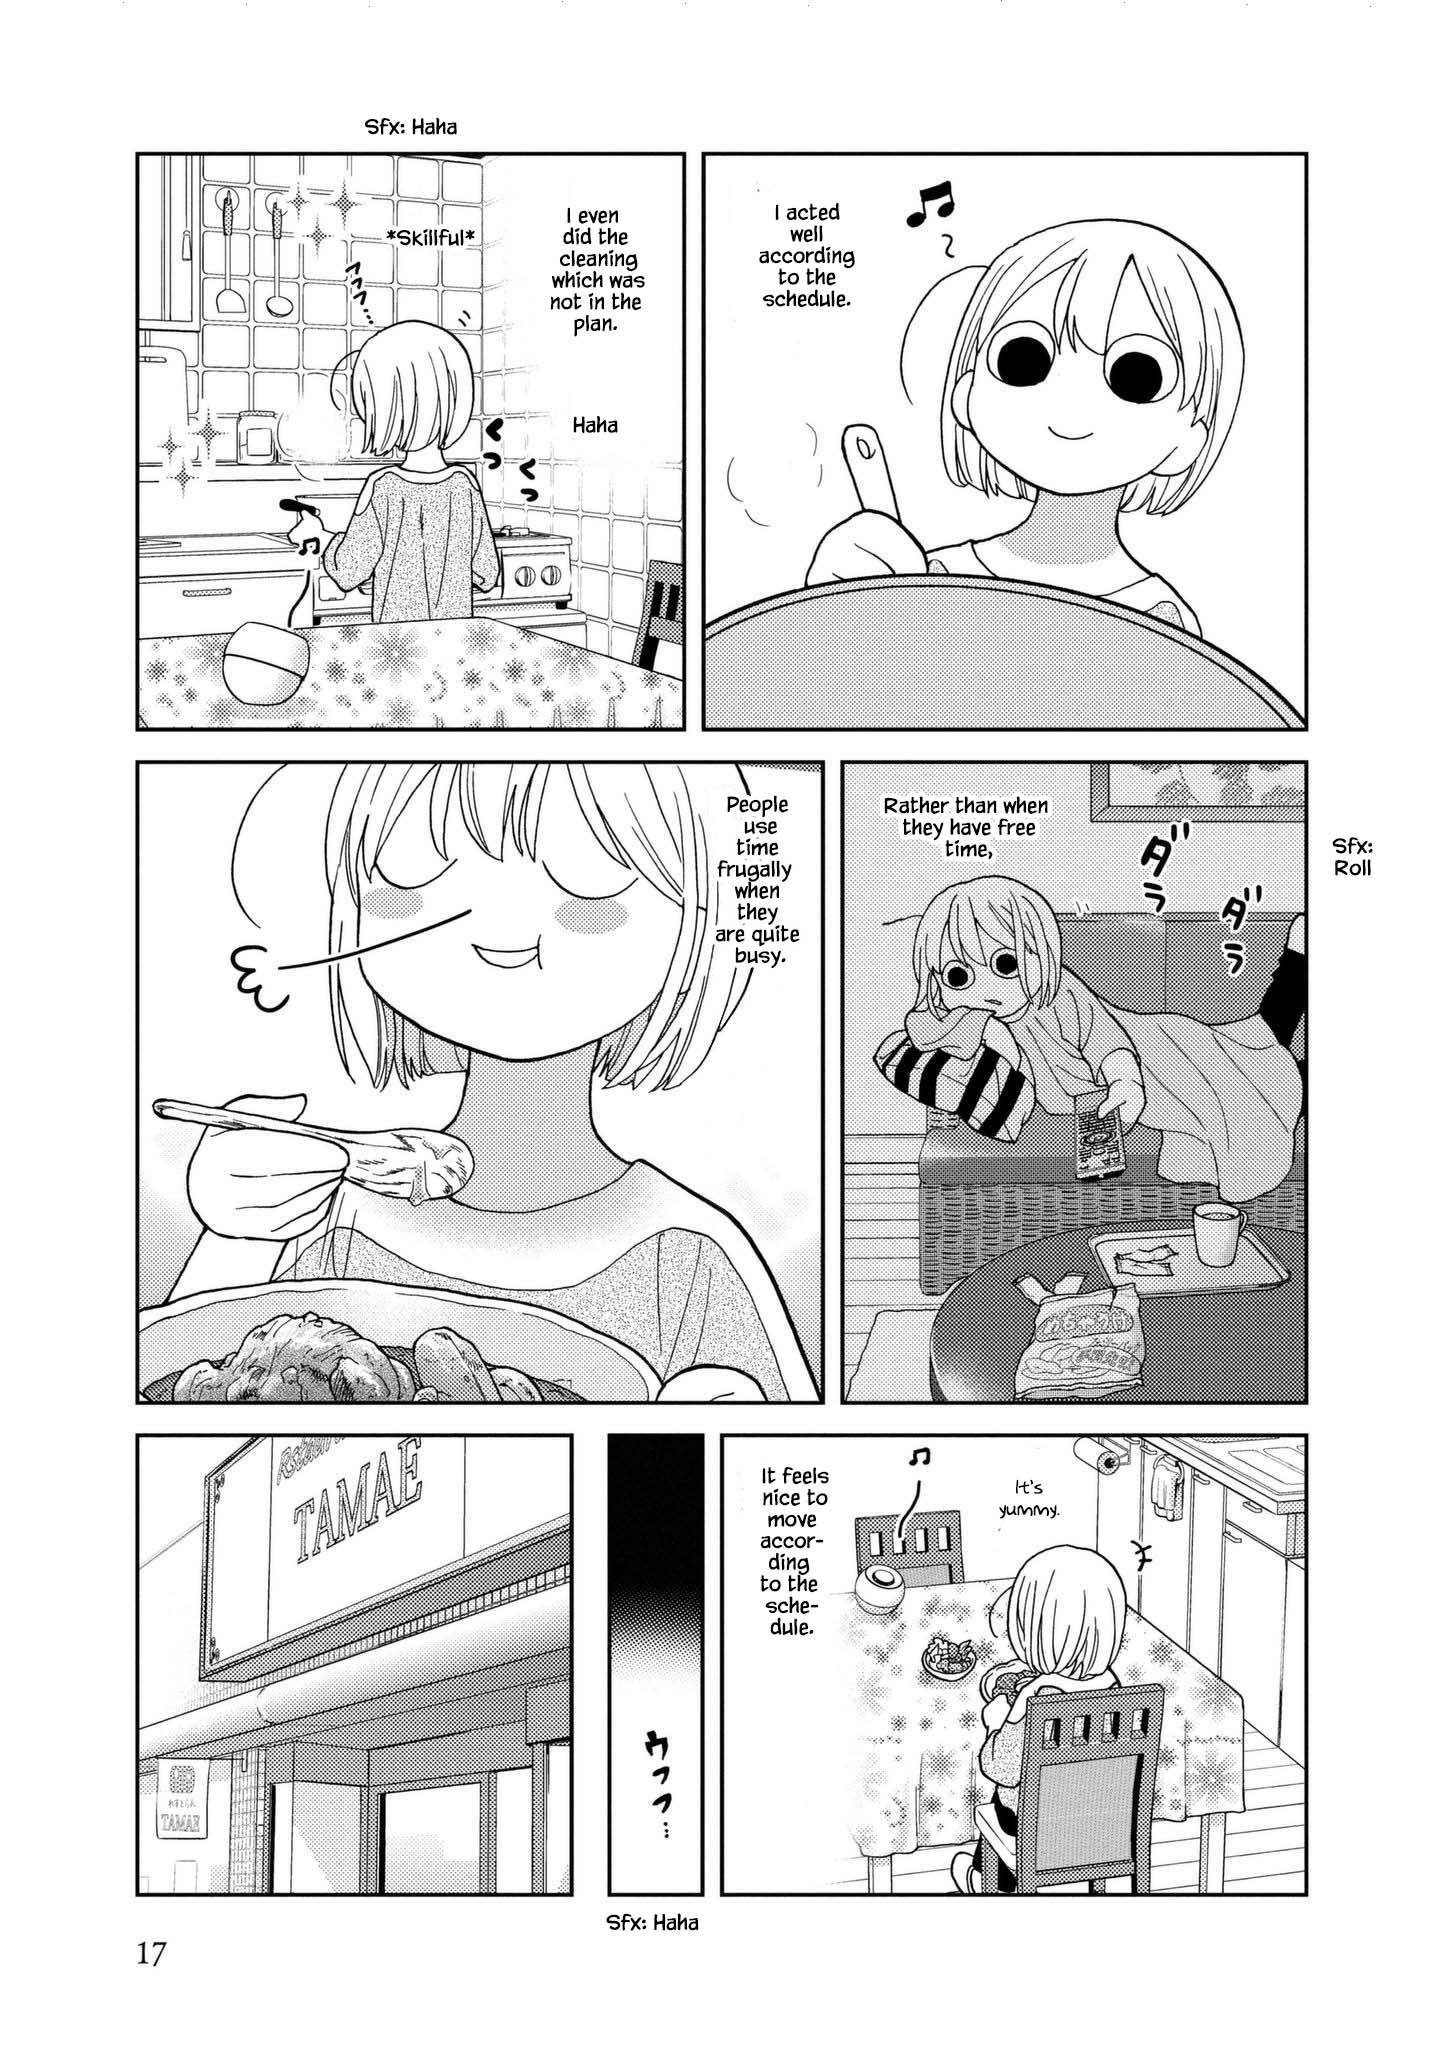 Takako-San - 41 page 5-90158d1c